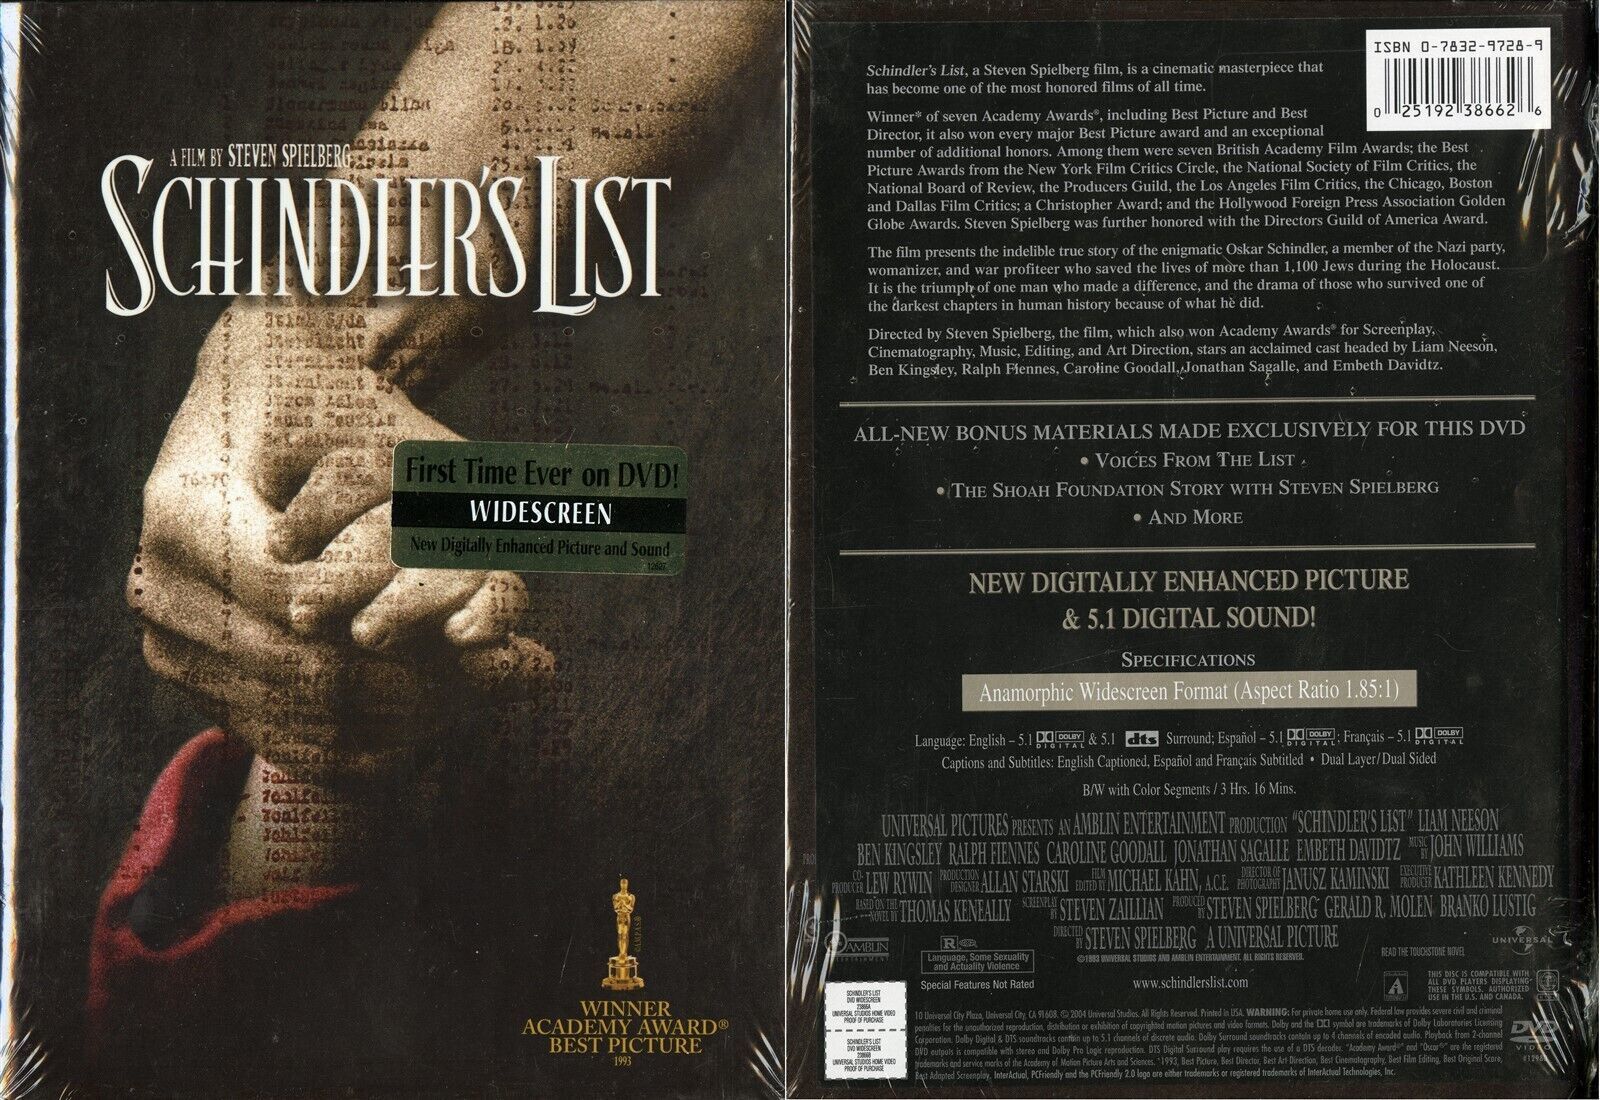 SCHINDLER'S LIST WS DVD DIGIBOOK BEN KINGSLEY RALPH FIENNES UNIVERSAL VIDEO NEW - $8.95